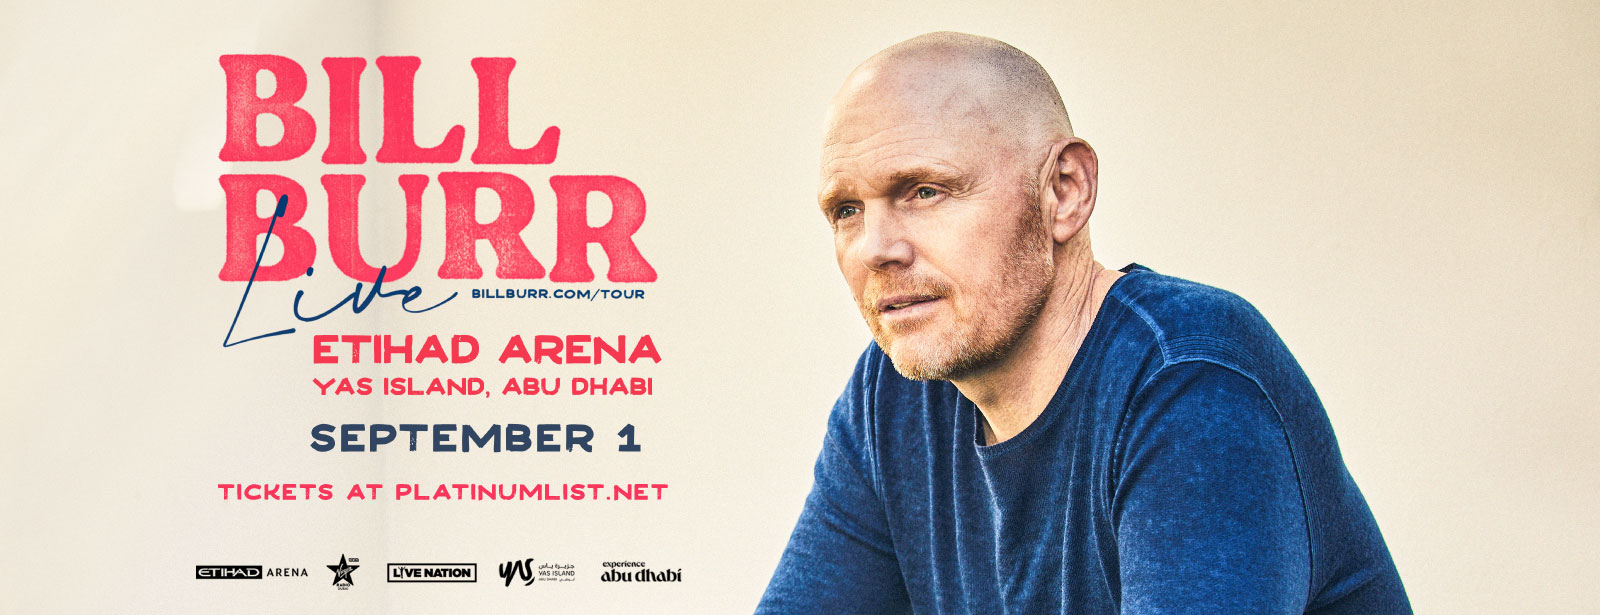 Bill Burr Show at Etihad Arena, Abu Dhabi - Coming Soon in UAE